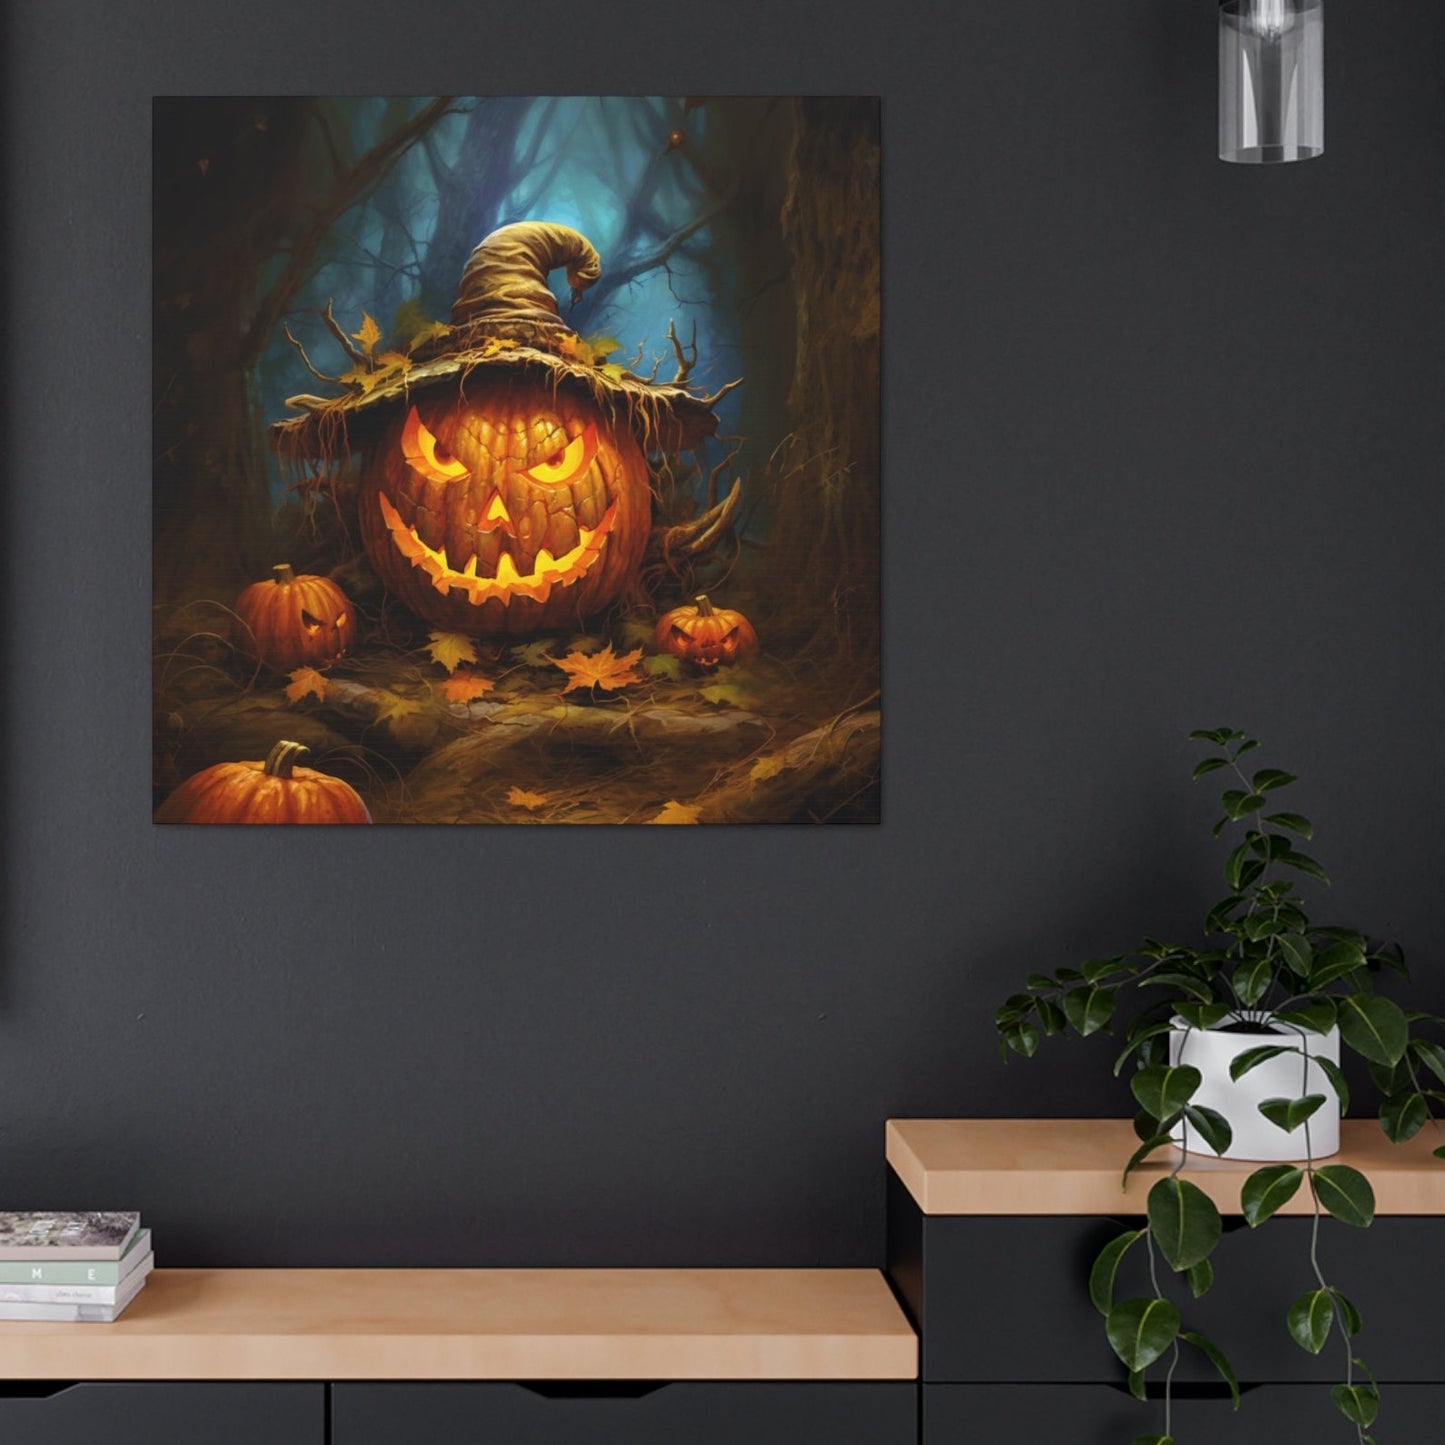 Halloween jack-o-lantern decorations